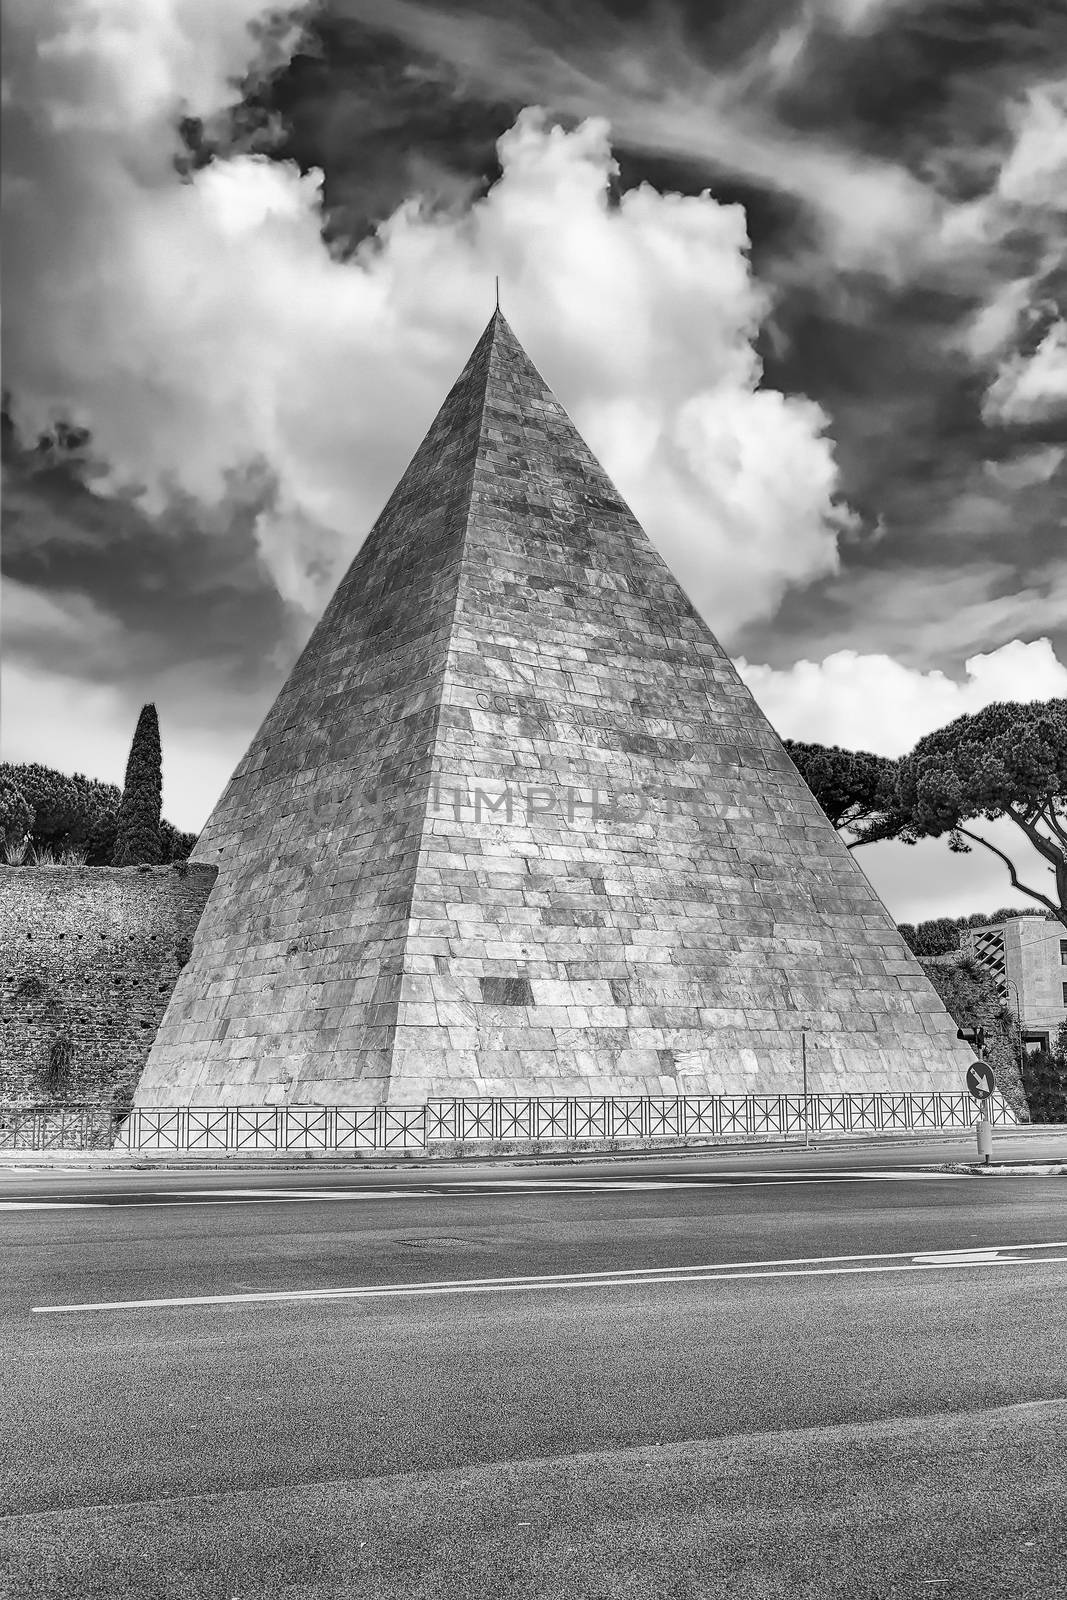 Pyramid of Cestius, iconic landmark in Rome, Italy by marcorubino